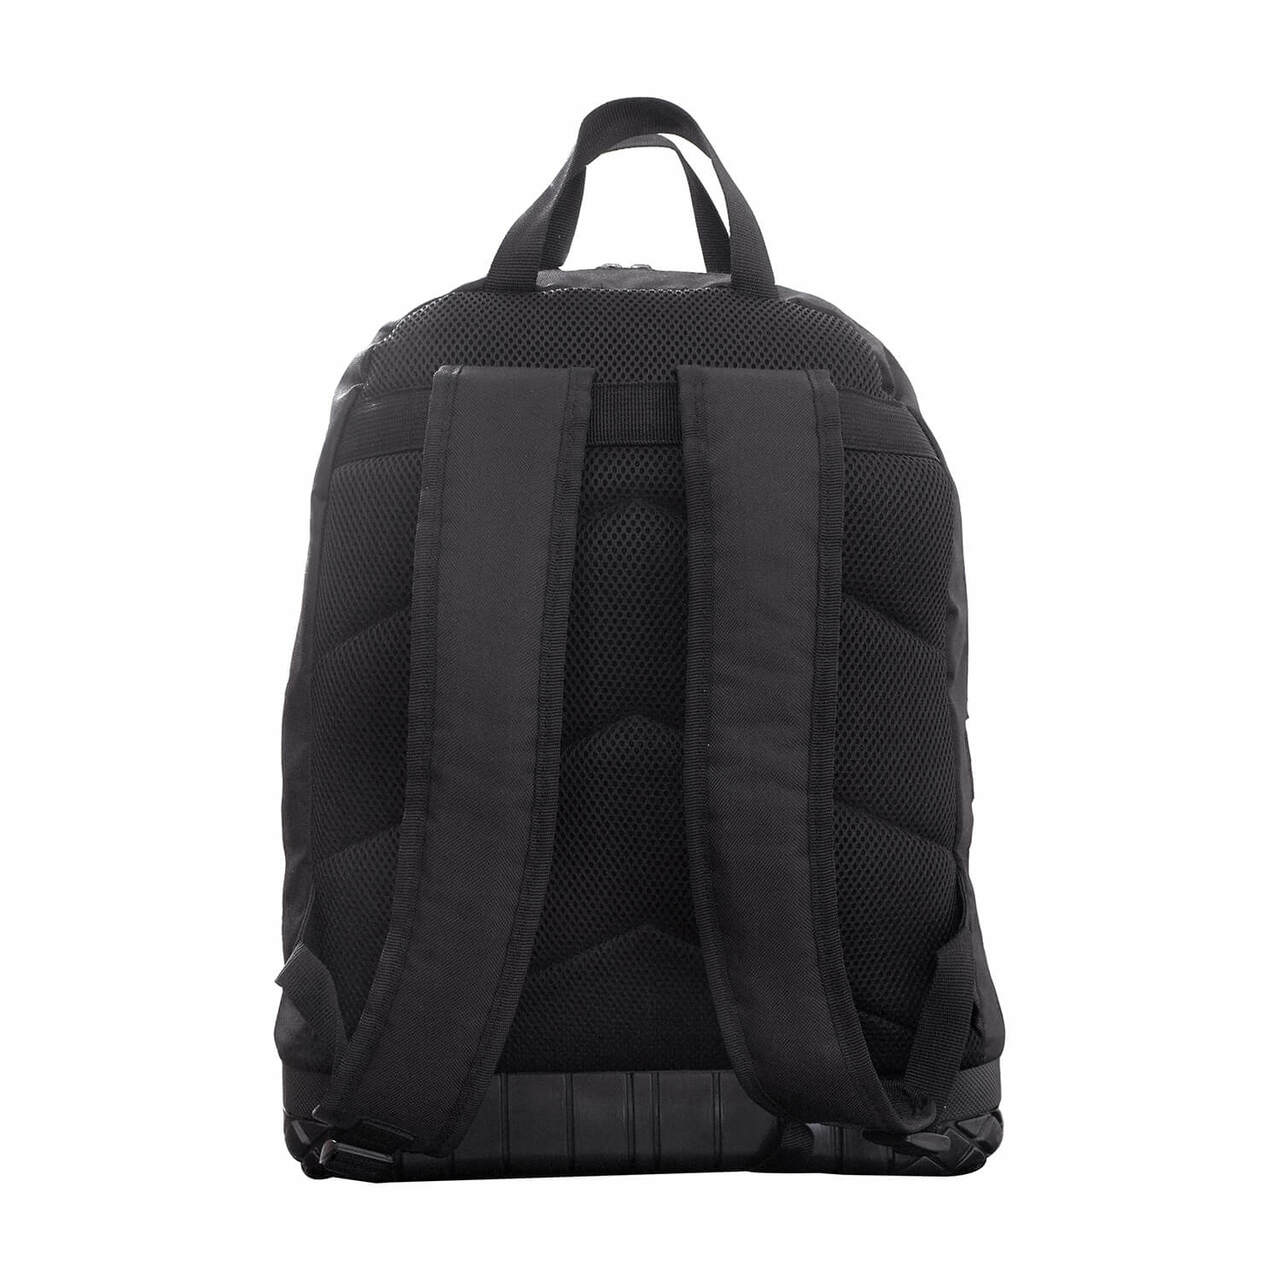 Arizona Diamondbacks Tool Bag Backpack